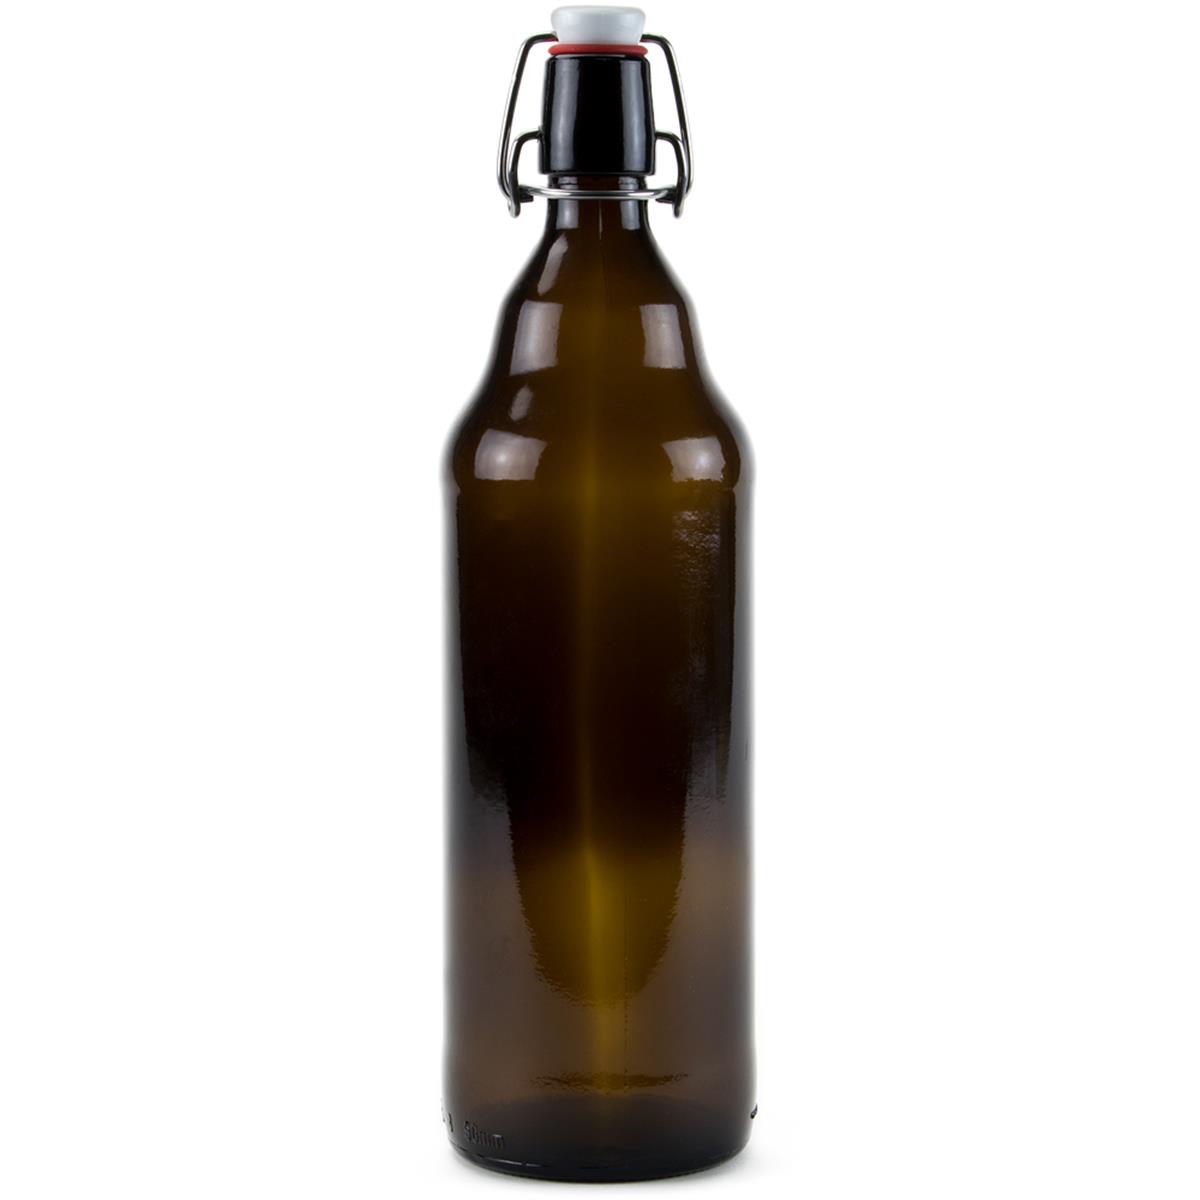 Kbot-003 33.8 Oz Grolsch Bottles